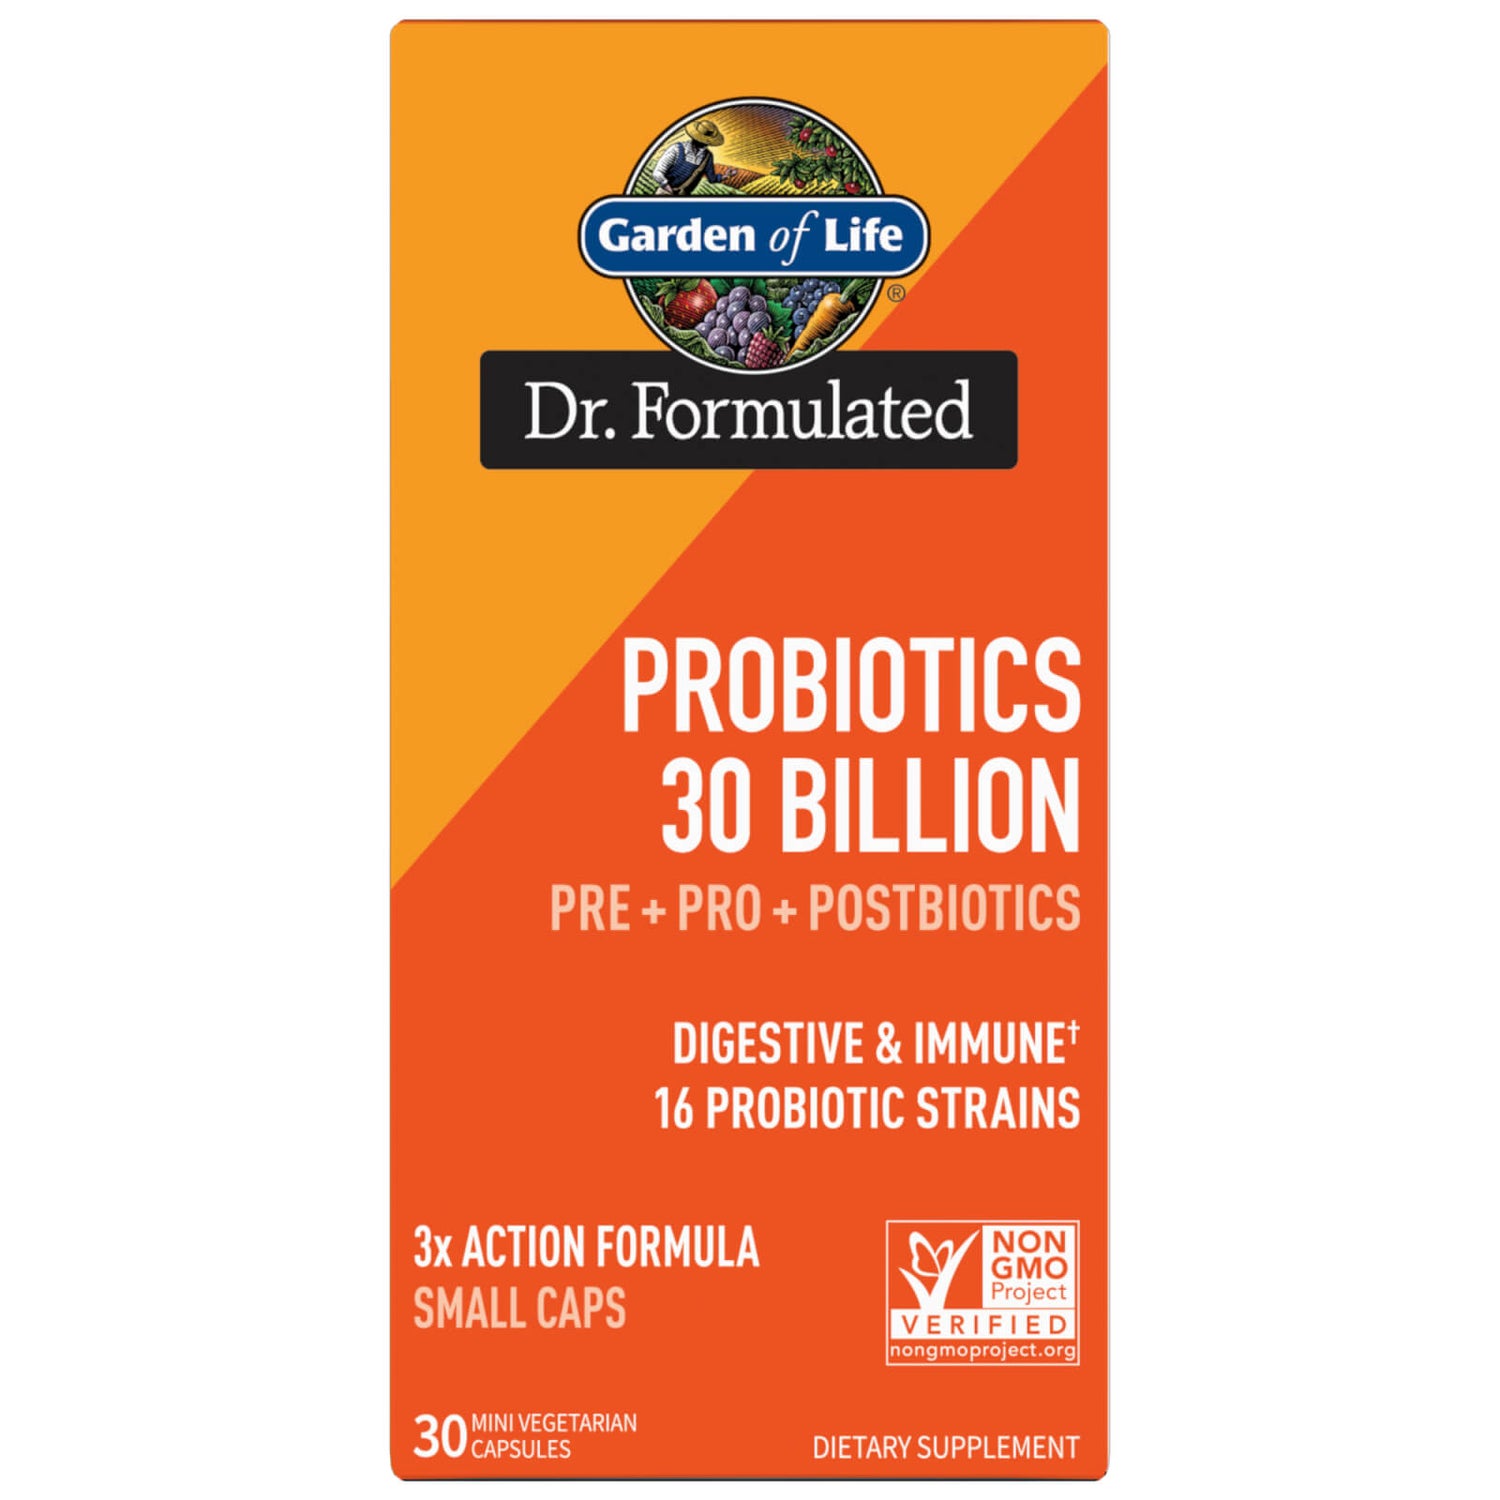 Microbiome Pre+Pro+Postbiotics 30B Dr. Formulated